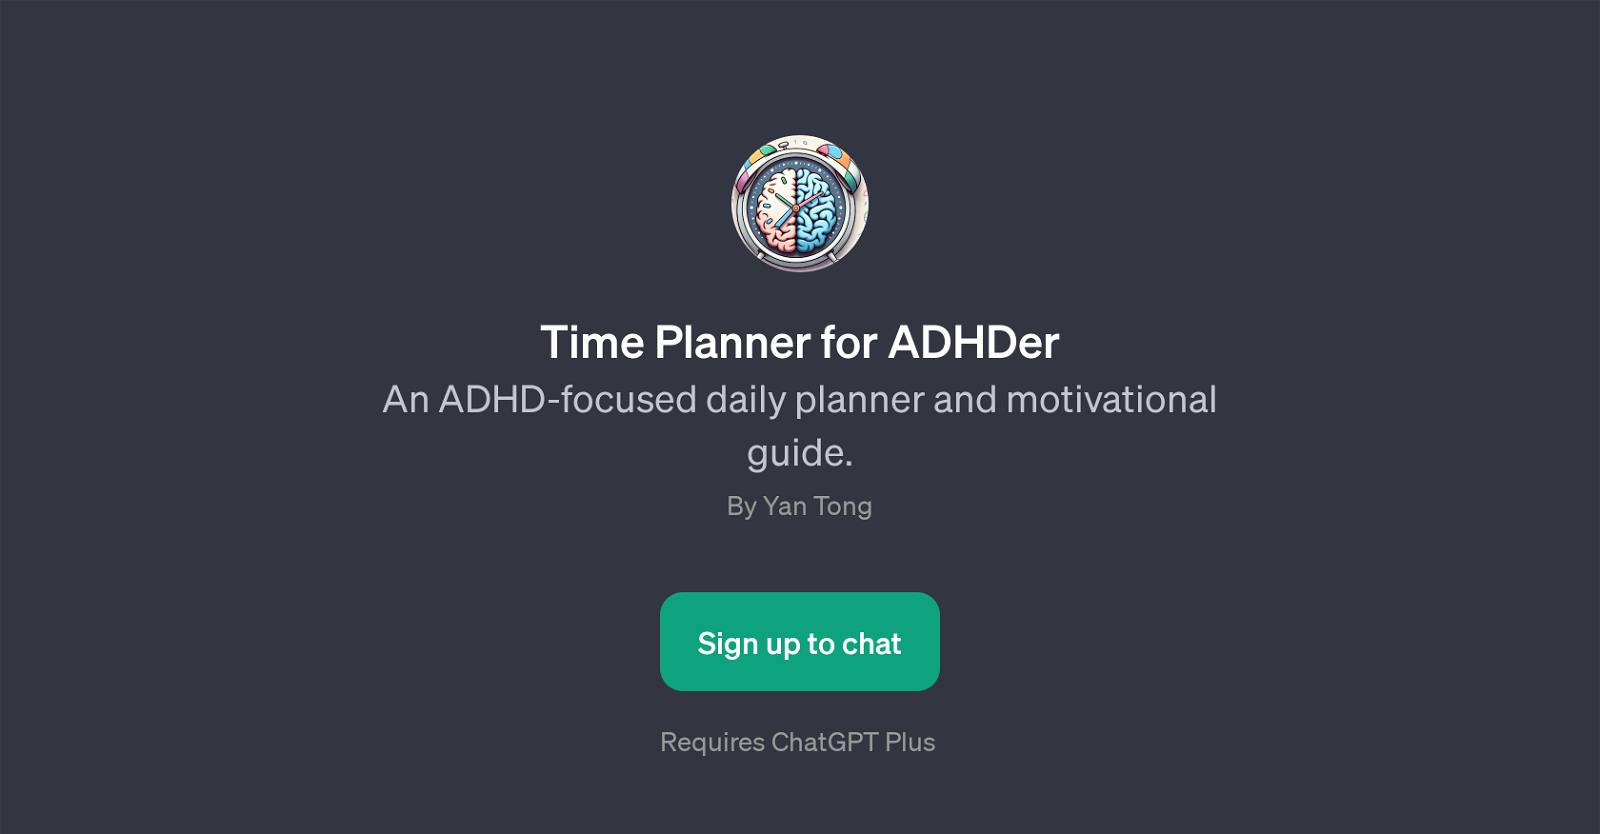 Time Planner for ADHDer website